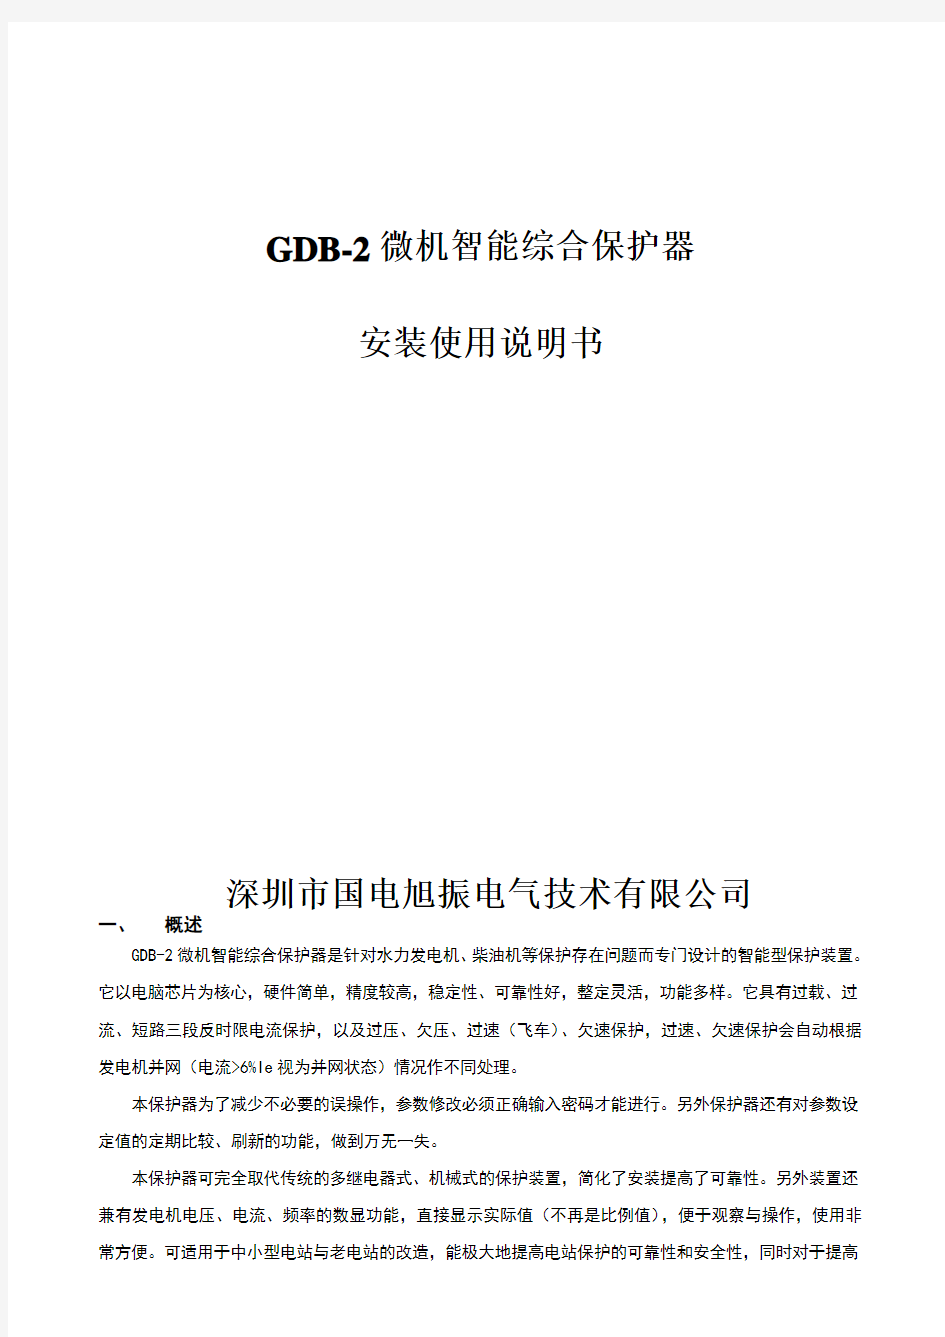 GDB-2微机综合保护器说明书